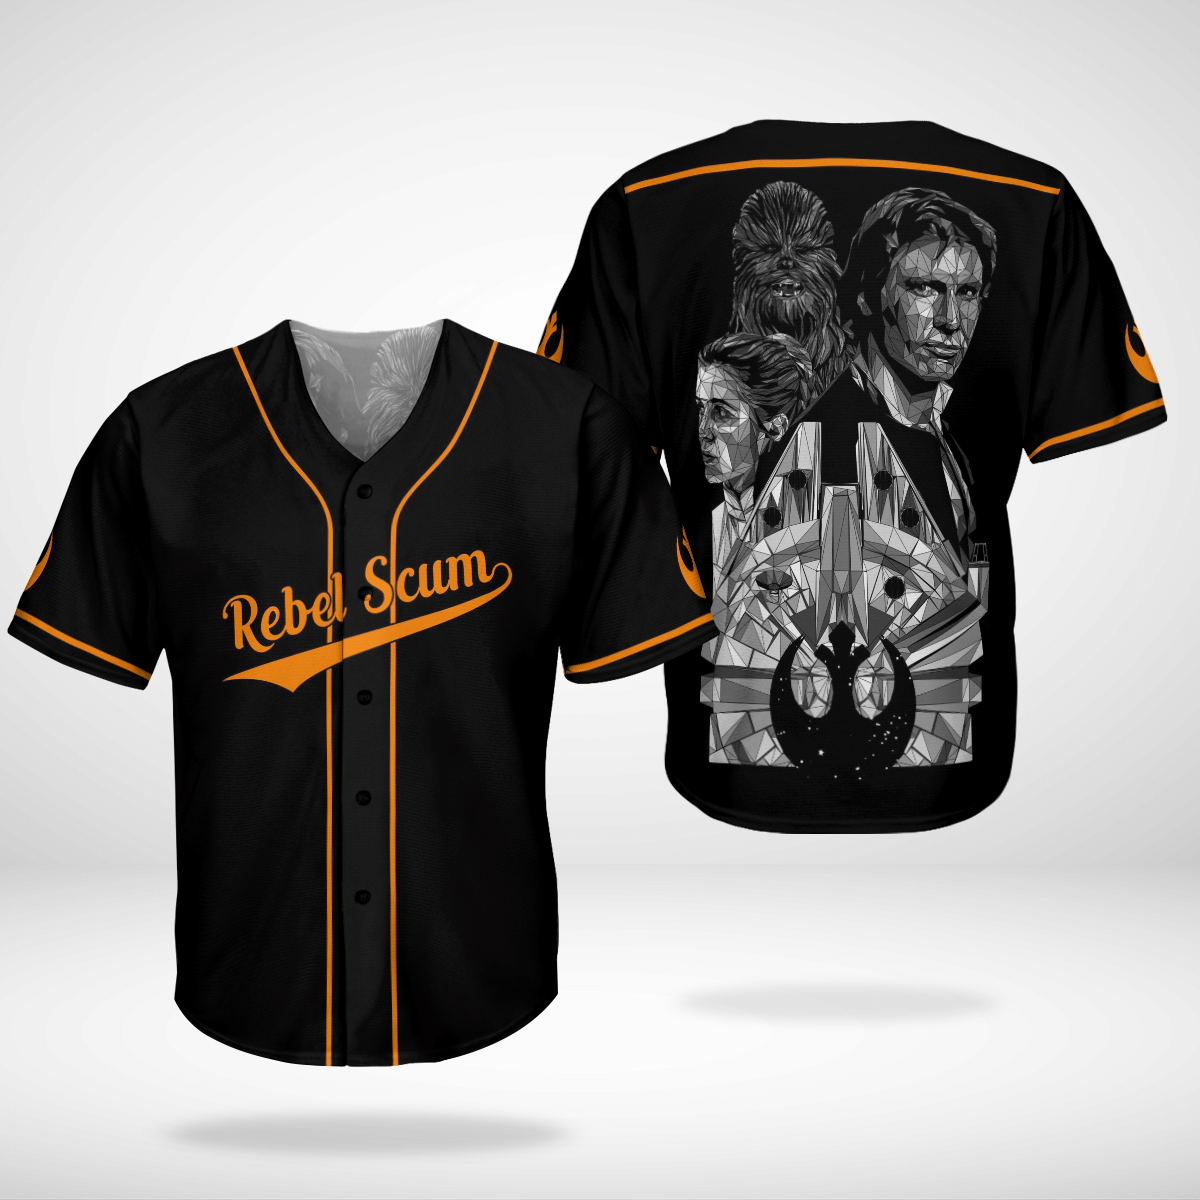 Rebel Scrum baseball shirt – LIMITED EDITION